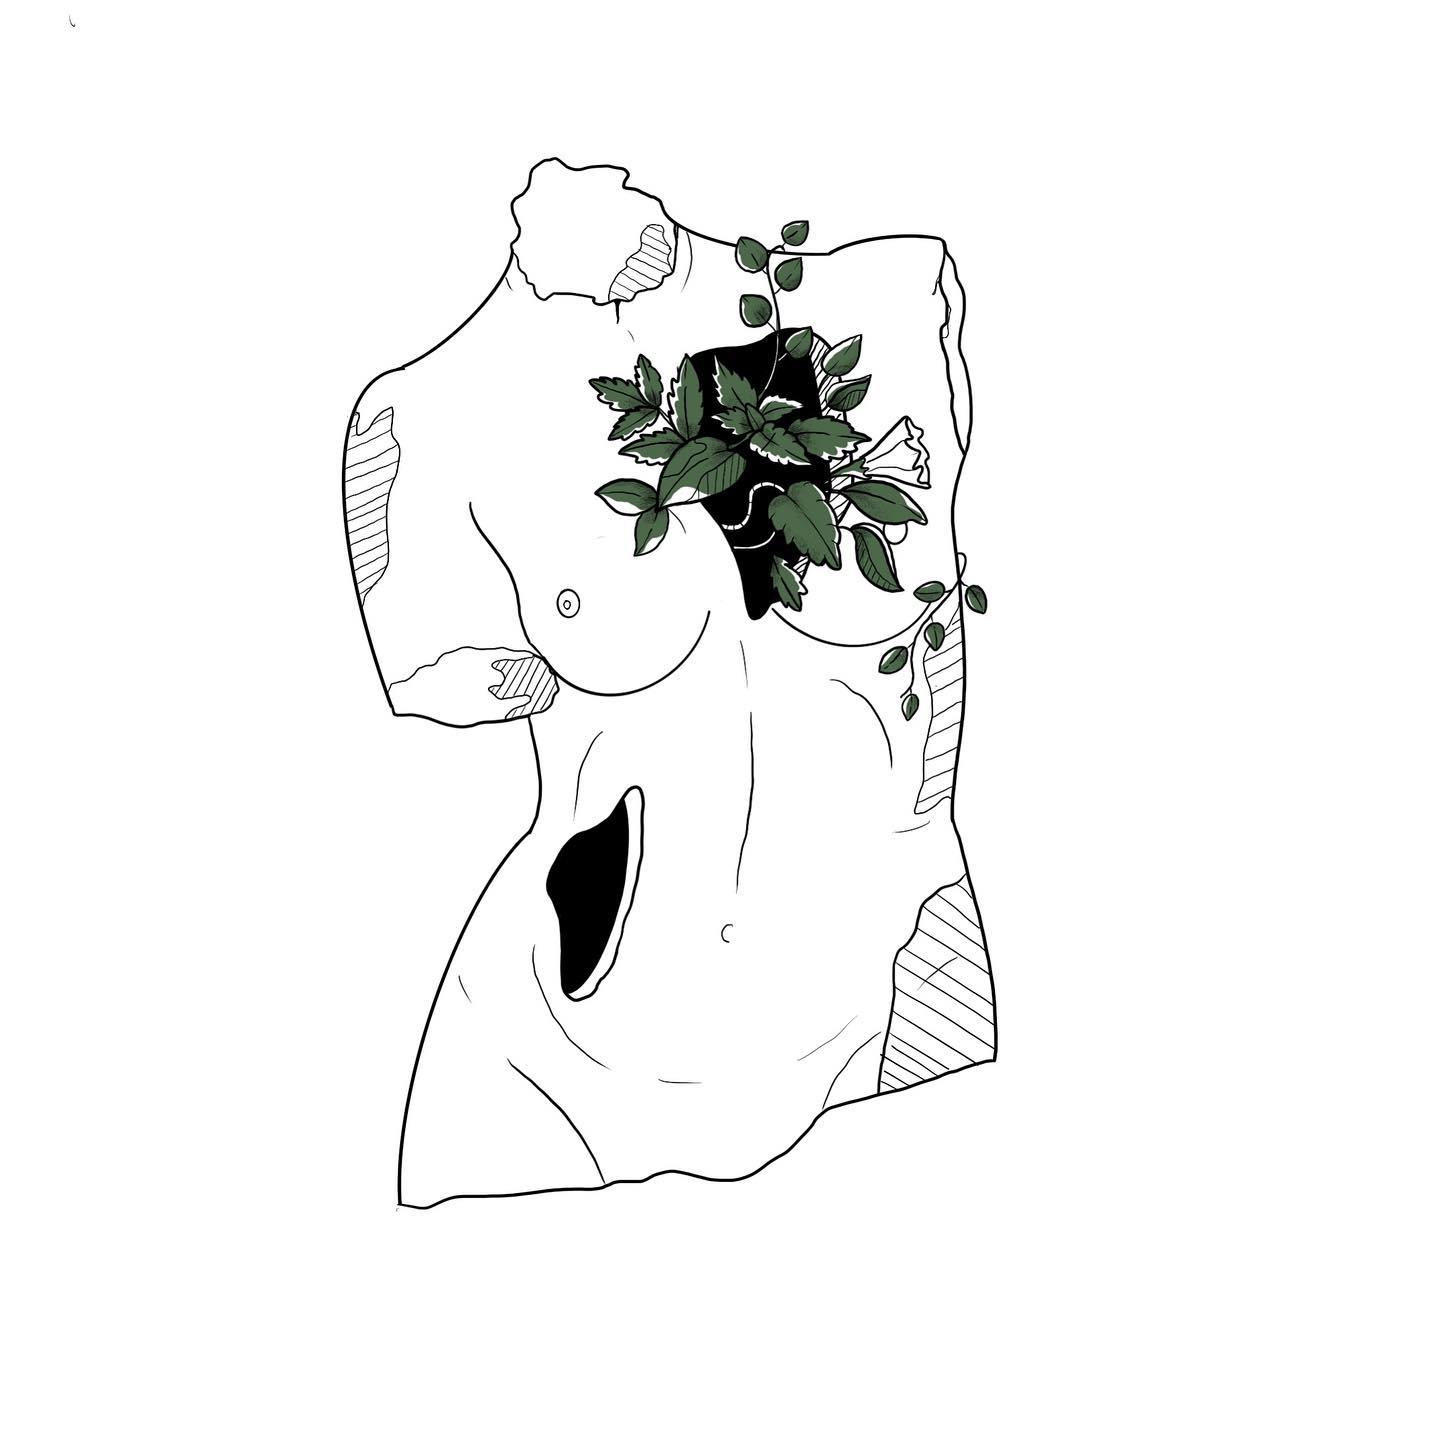 _woman Plant love_
#tattoo #flashtattoodesign #tattooideas #illustration #plants